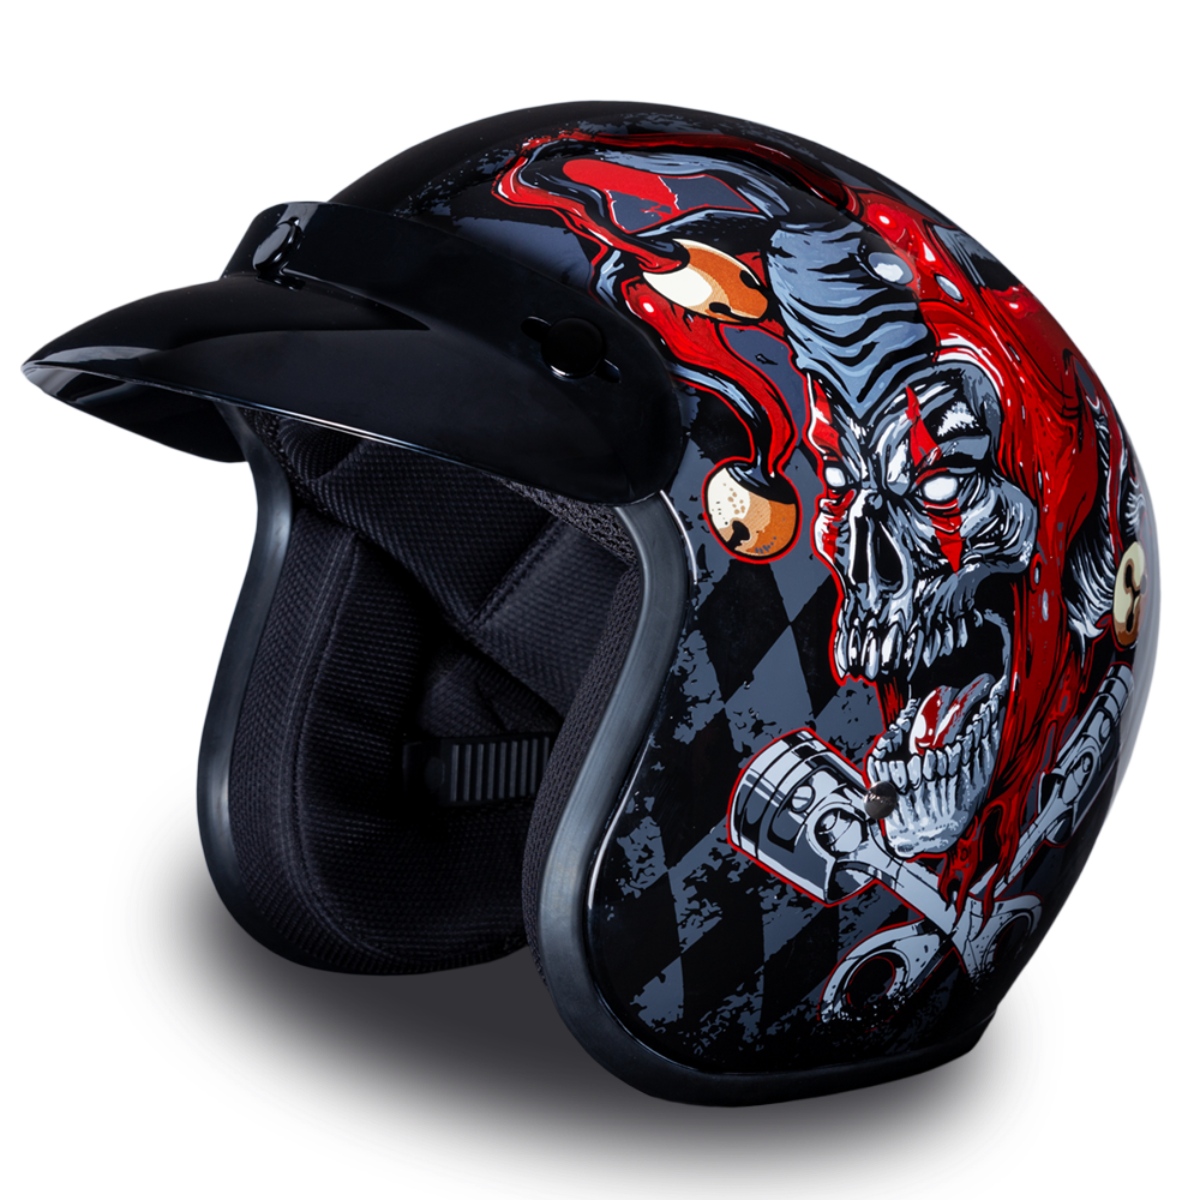 Daytona D.O.T. Cruiser w/ Joker Motorcycle Open Face 3/4 Shell Helmet